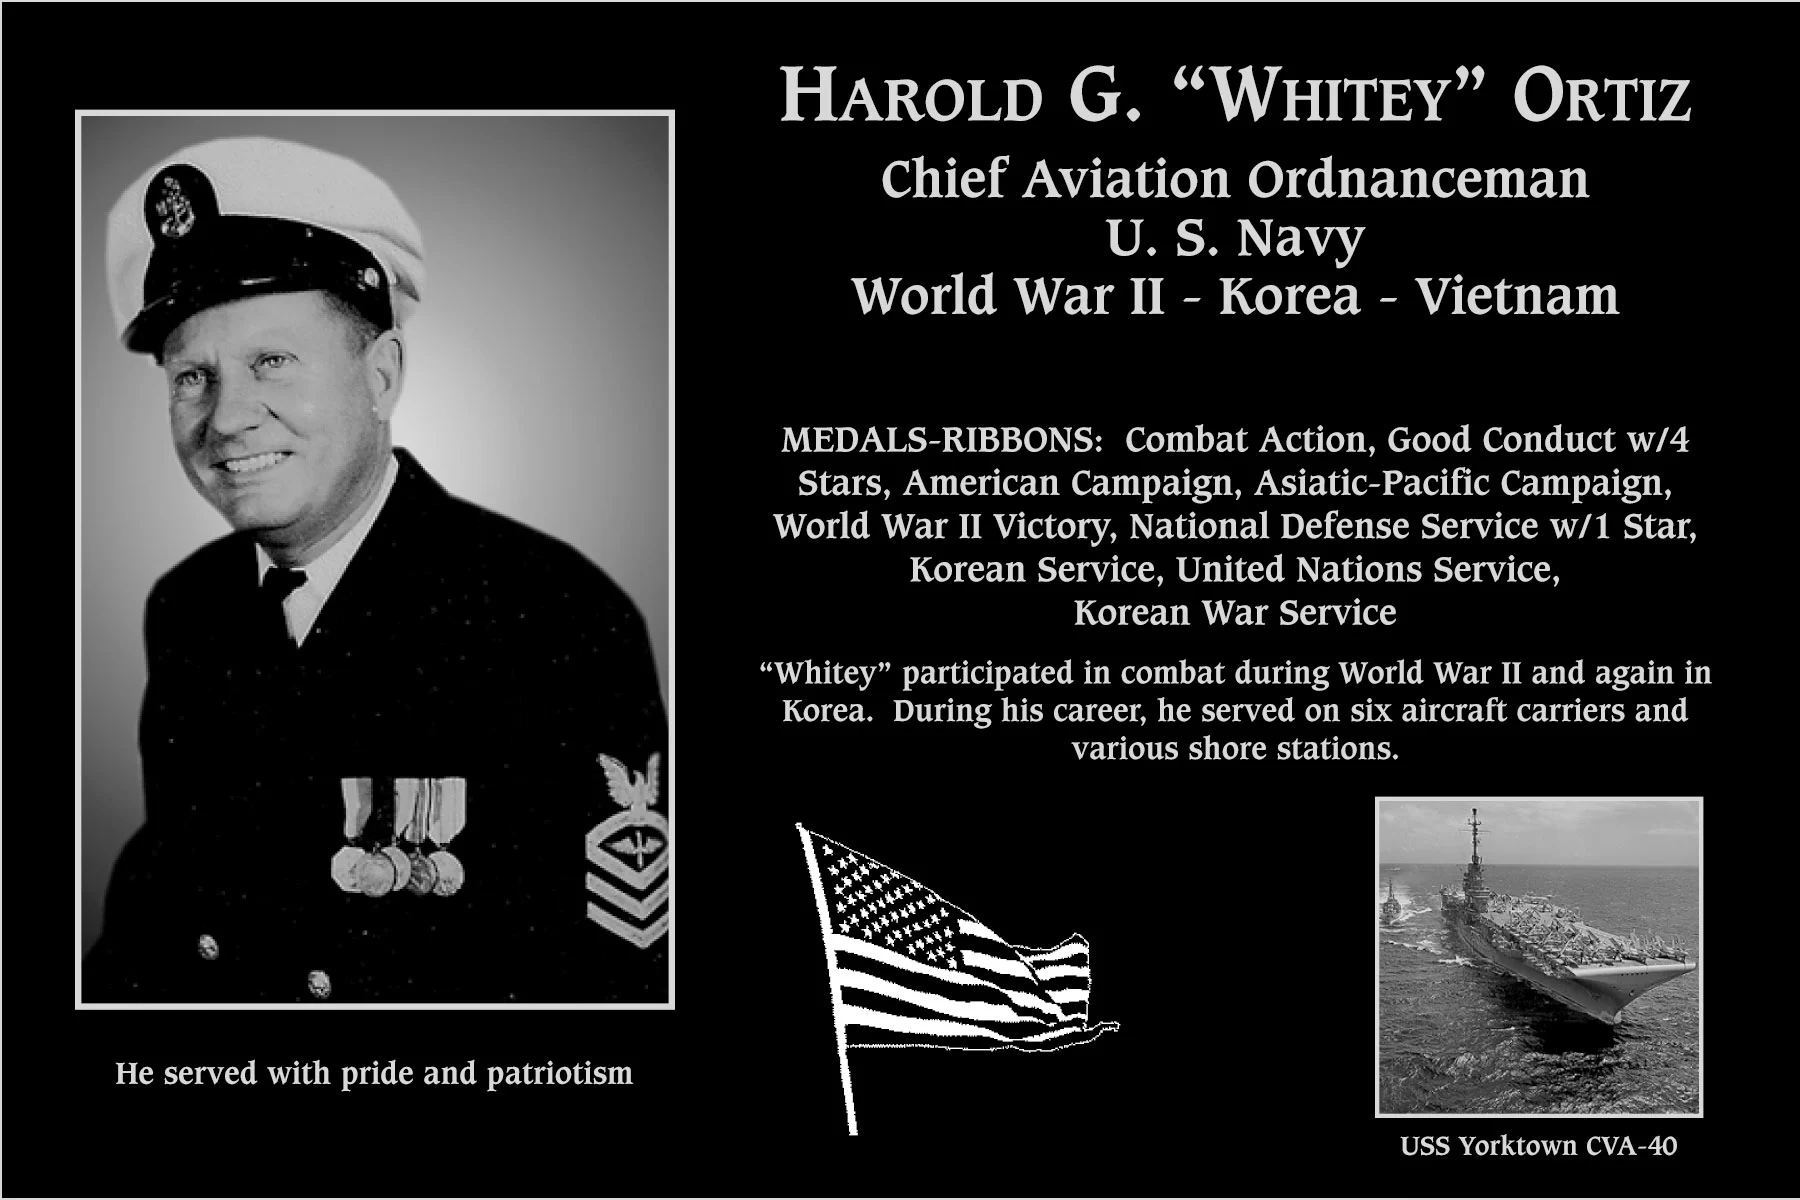 Harold G. “Whitey” Ortiz